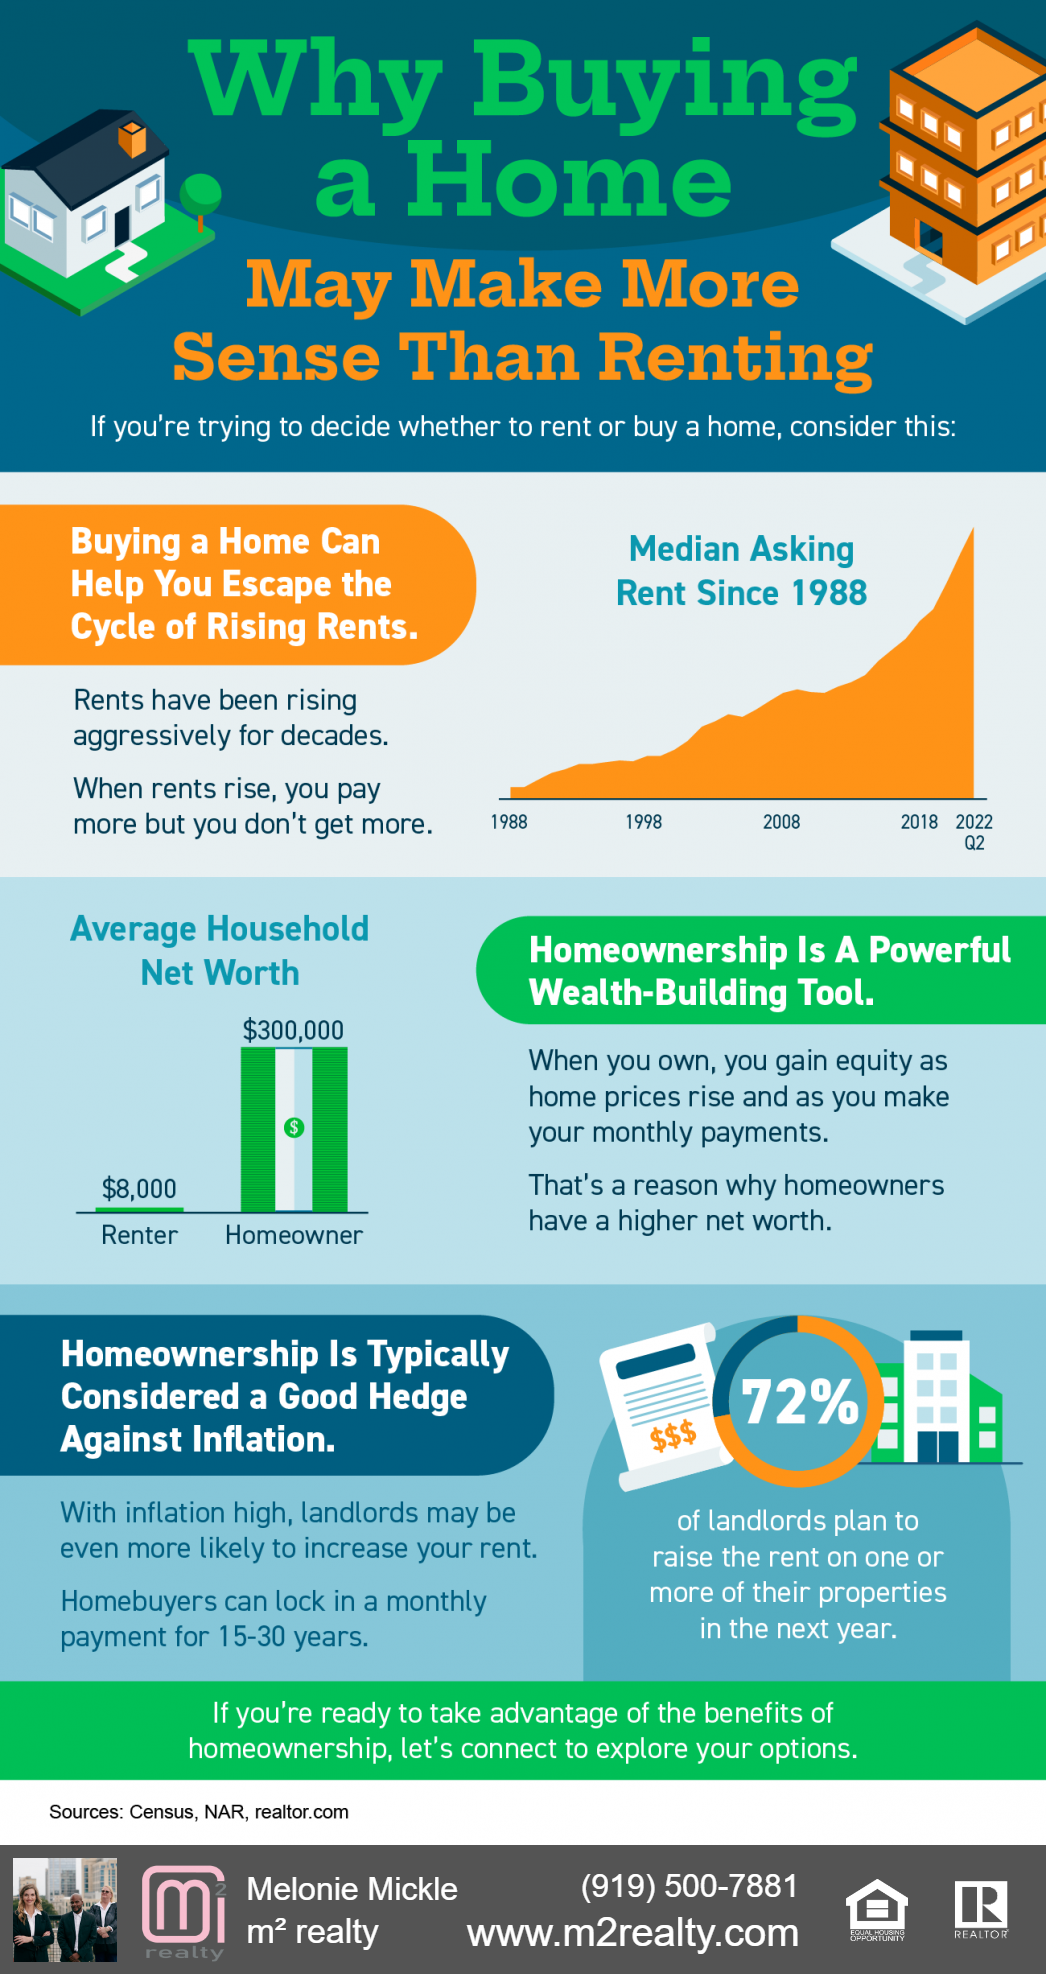 m2 realty Asks why buying a home may make more sense than renting.